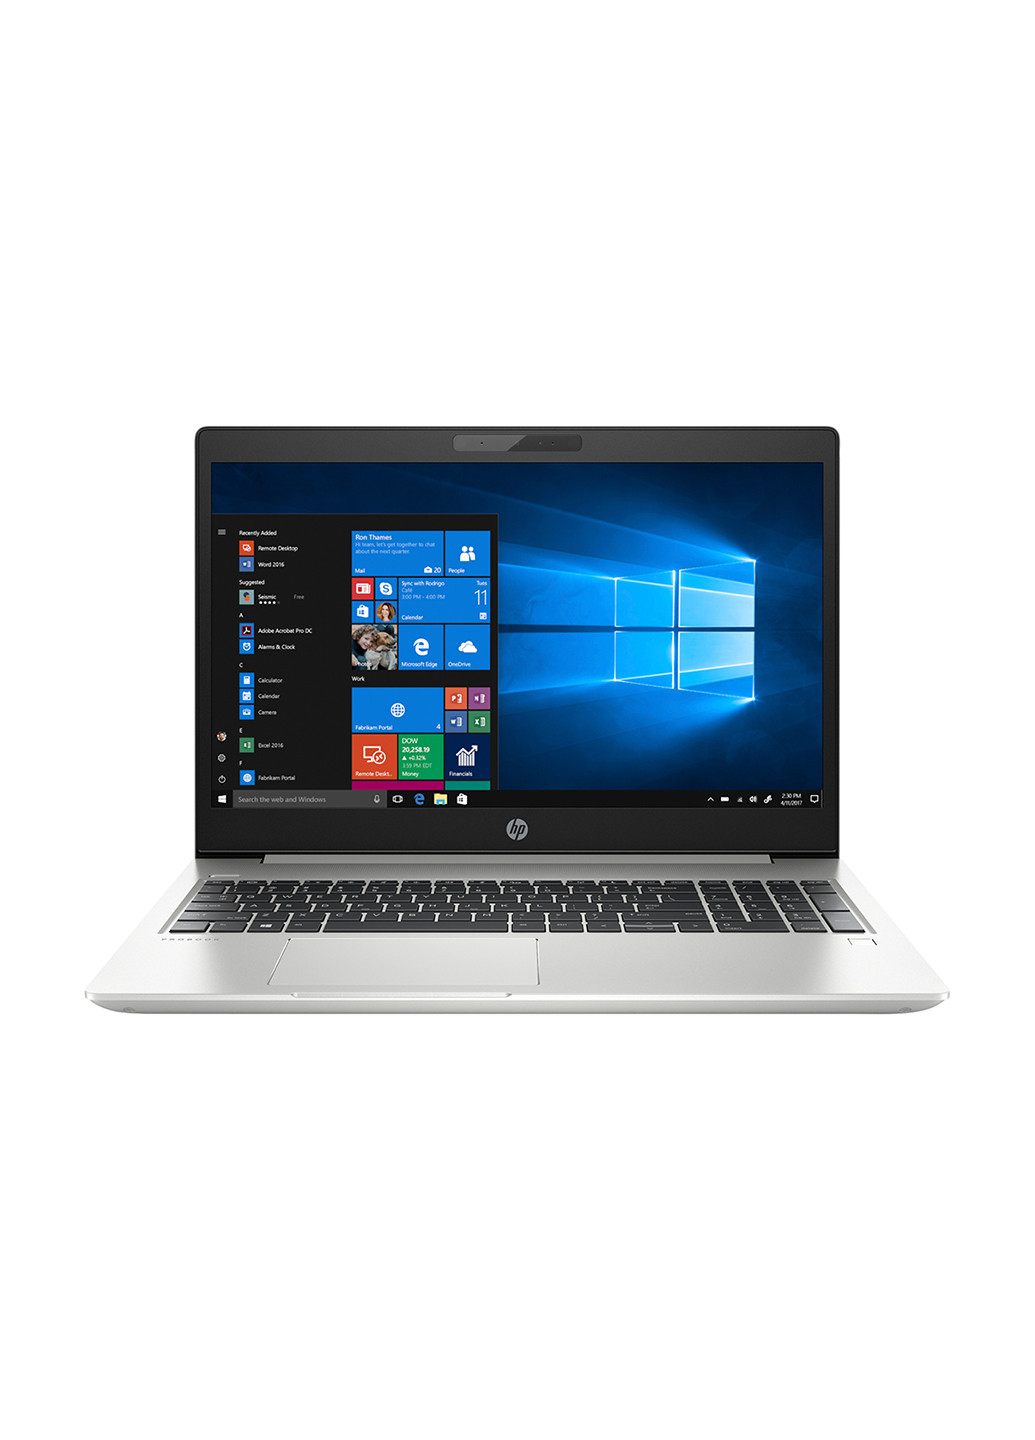 Ноутбук ProBook 450 G6 (4SZ47AV_V10) Silver HP probook 450 g6 (4sz47av_v10) silver (138209551)